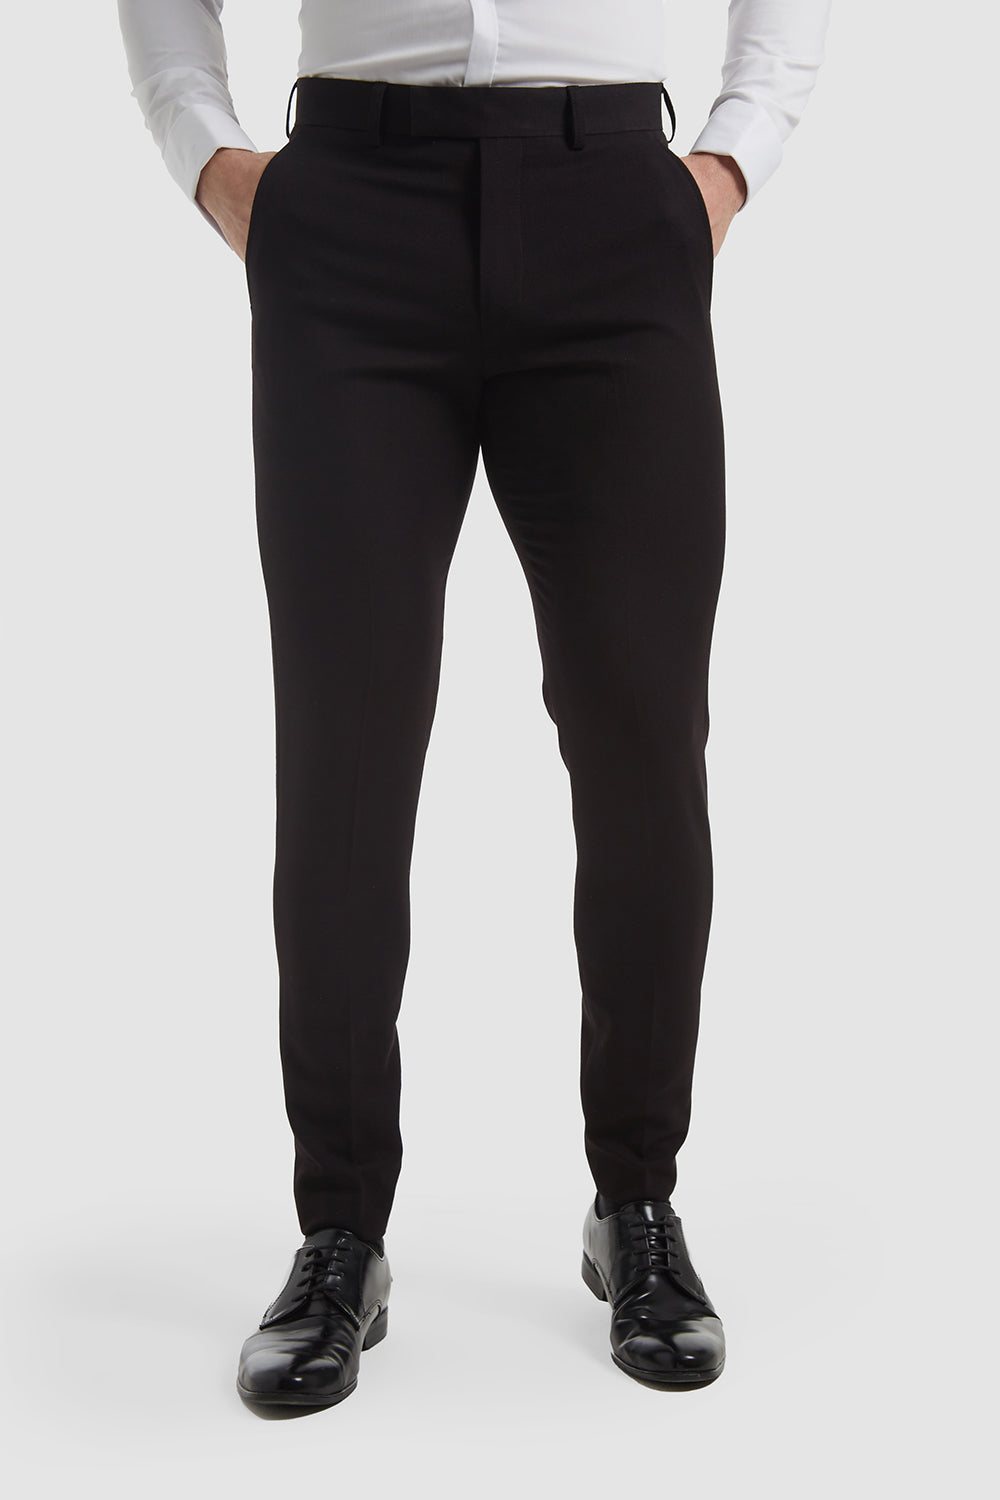  Mancrew Slim Fit Formal Pant For Men Formal Trouser Pack Of 3  Black